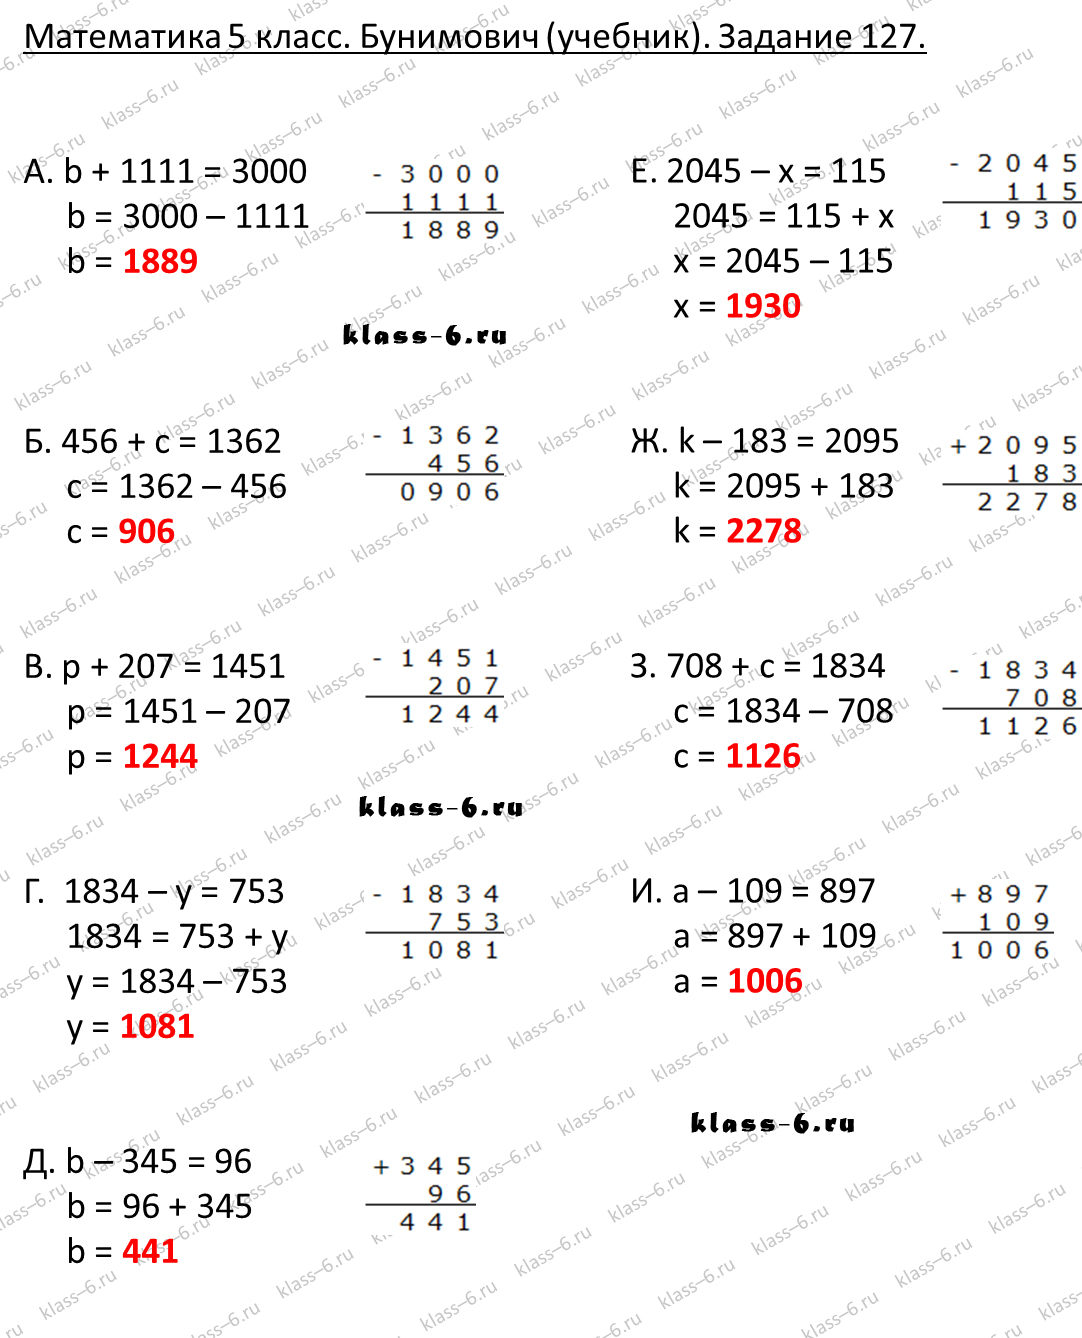 Математика 5 класс страница 127 упражнение 6.246. Математика 5 класс Бунимович учебник. Математика 5 класс задание 1834. B + 1111 = 3000. Найдите неизвестное число b+1111 3000.